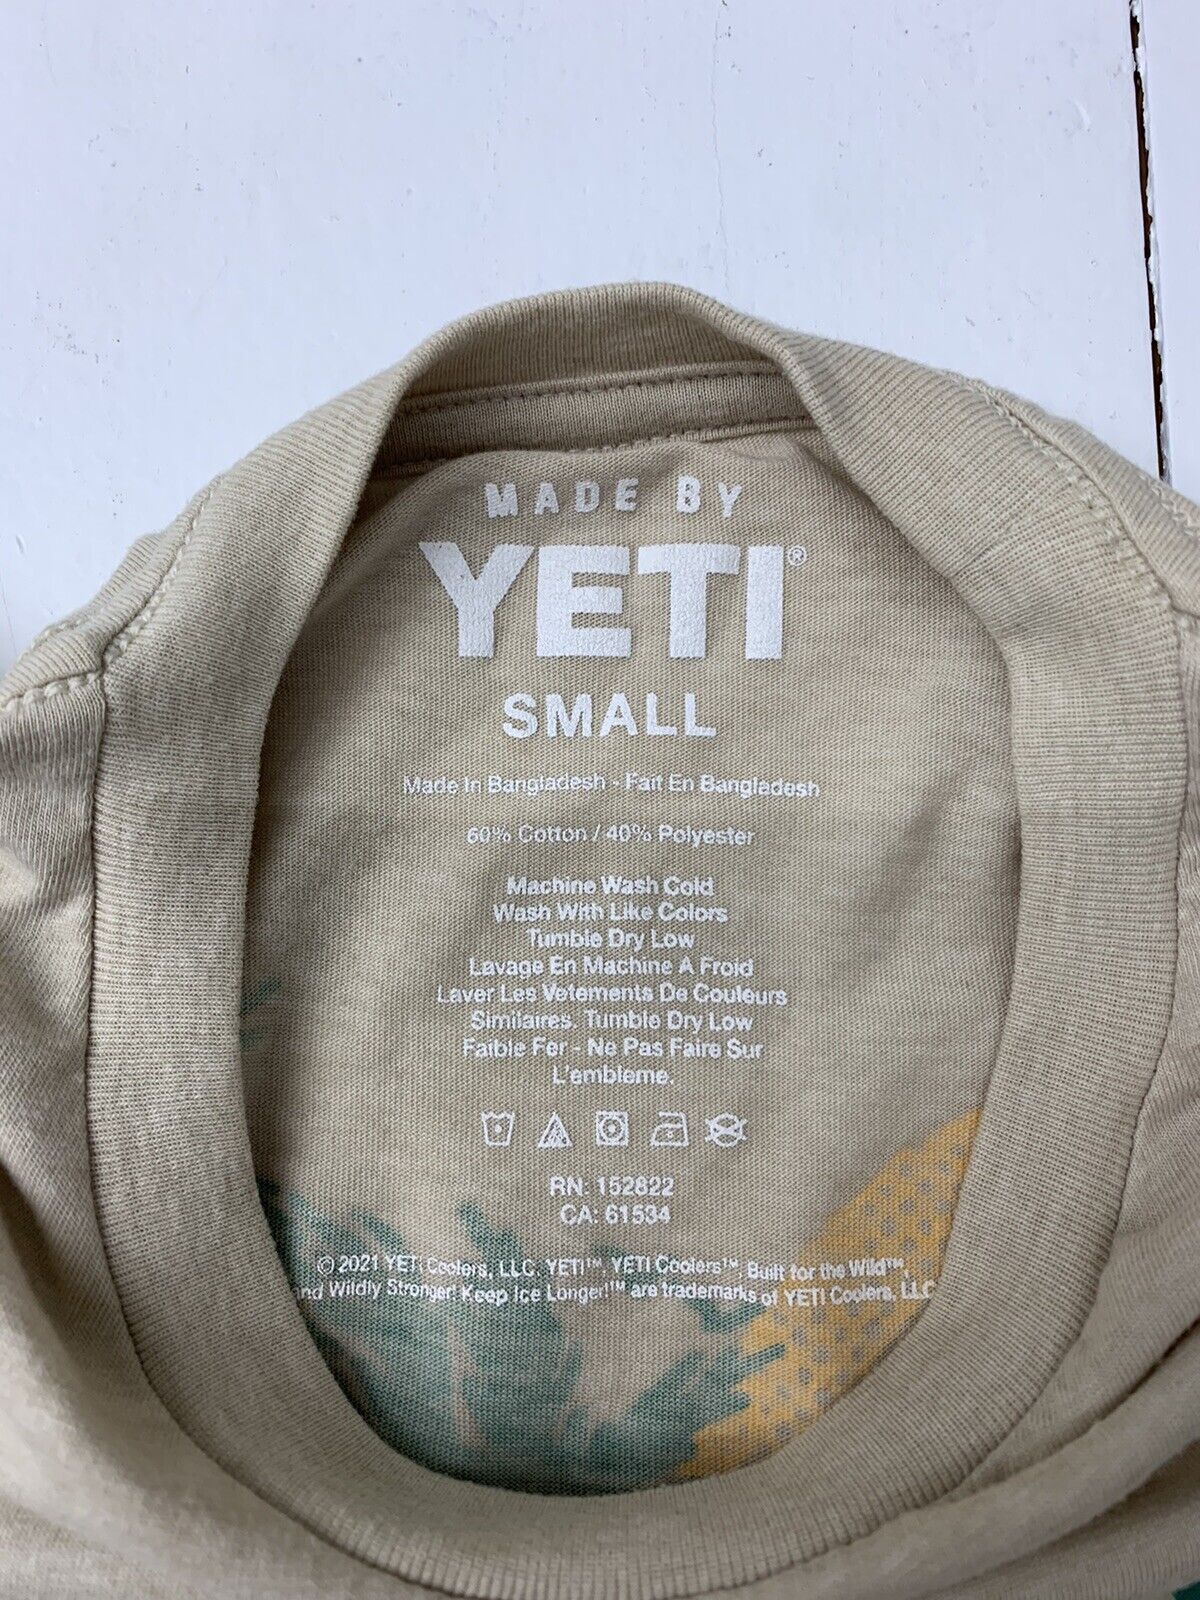 Yeti Mens Tan Short Sleeve Shirt Size Small - beyond exchange